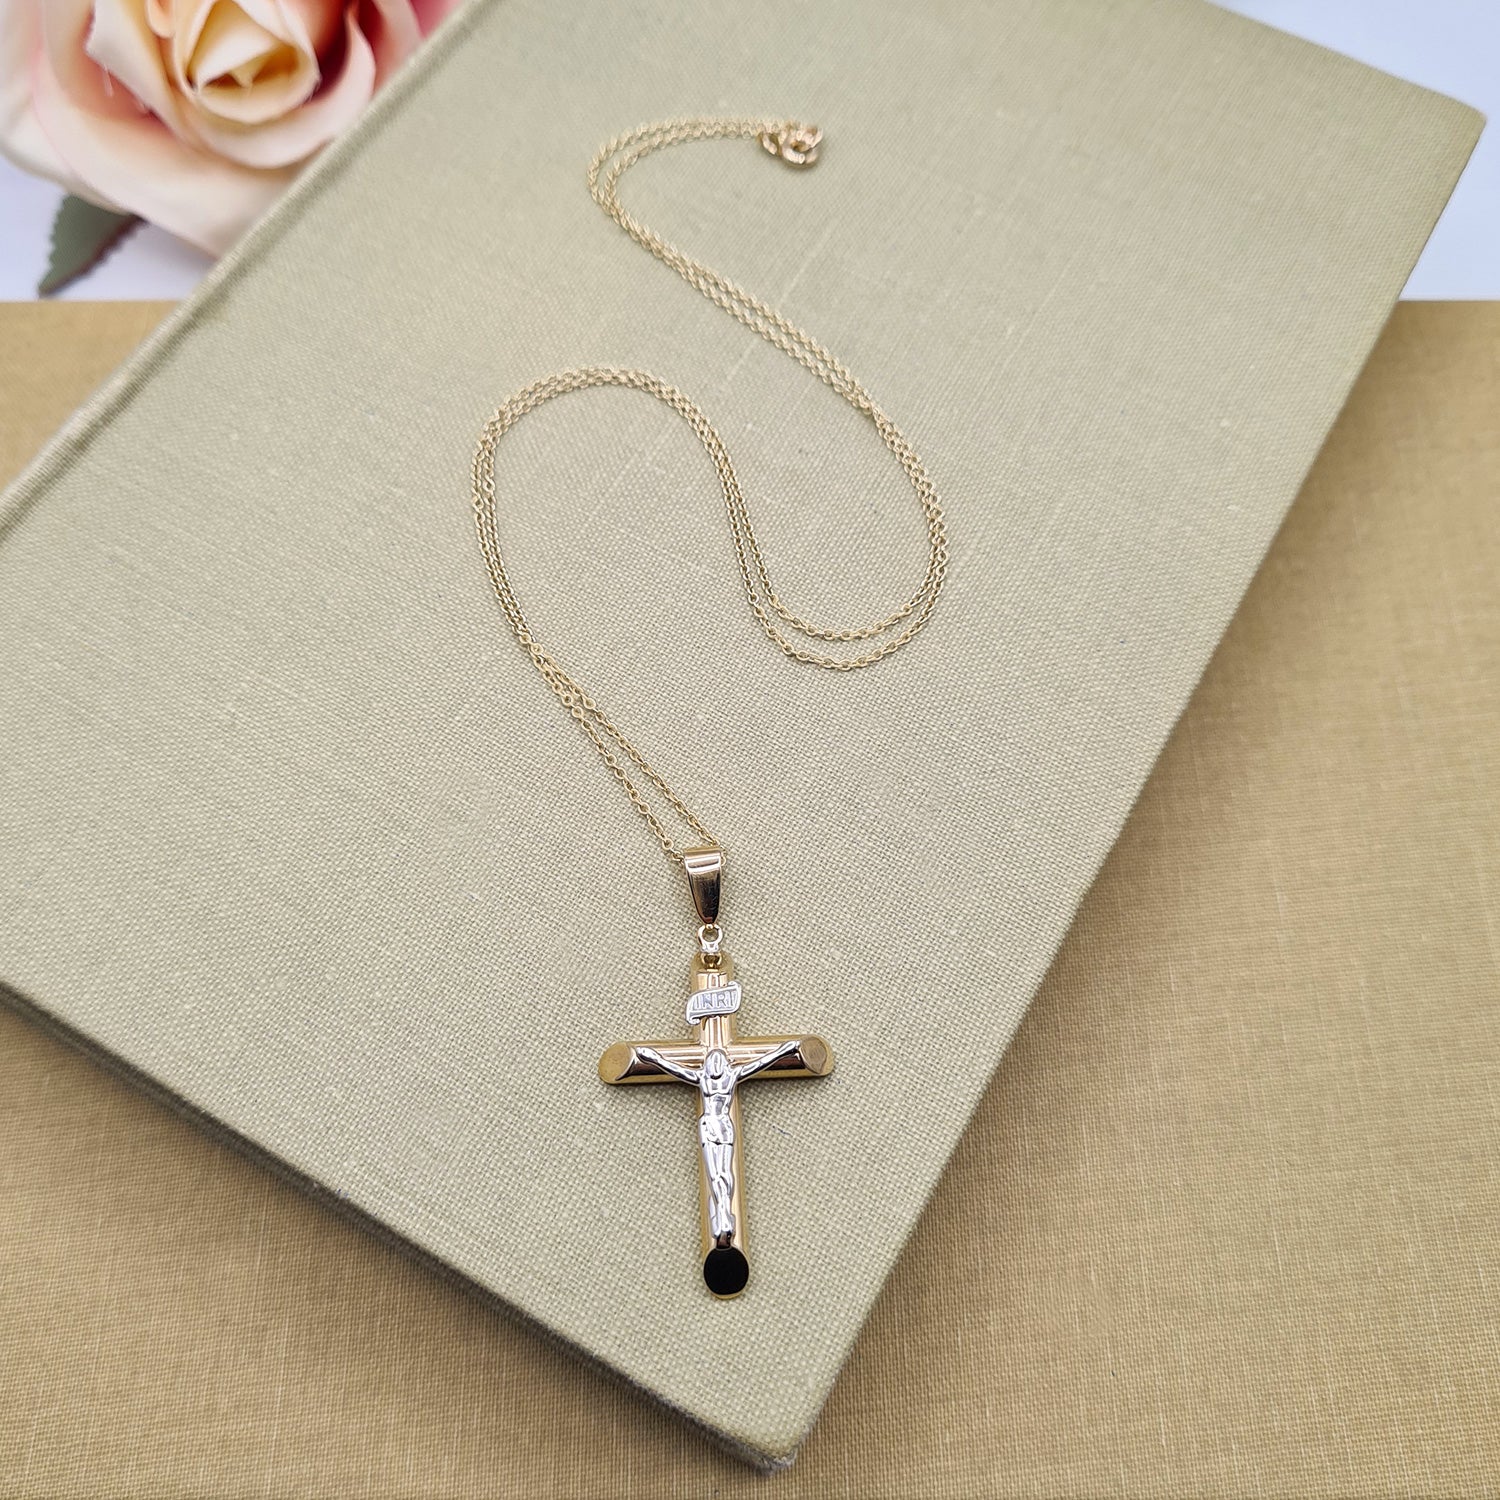 gold crucifix and chain